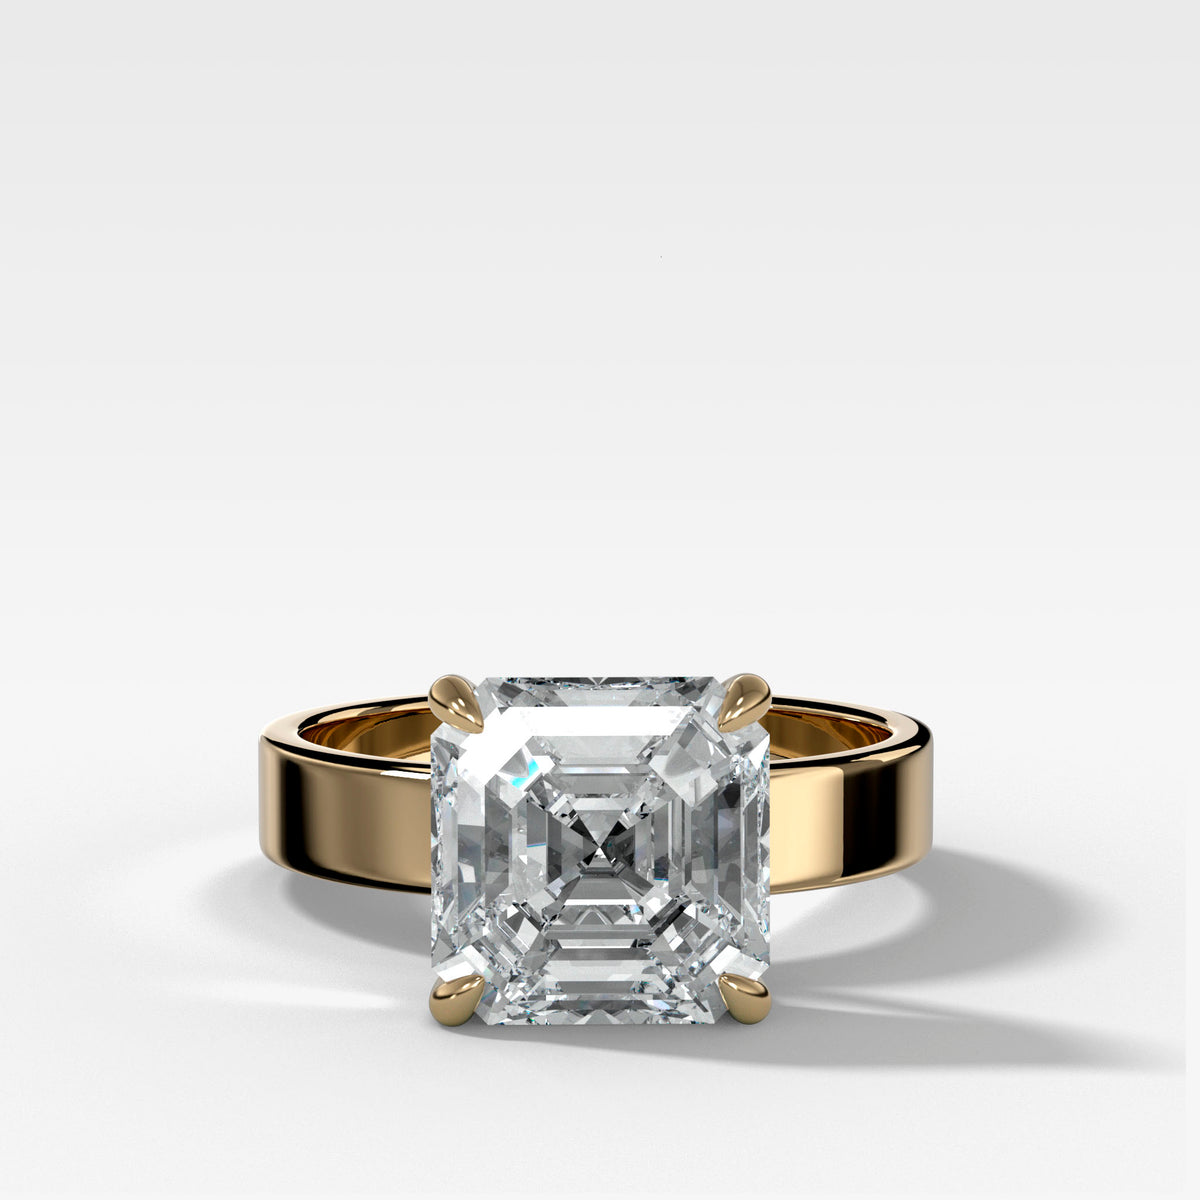 Finest Solitaire Engagement Ring With Asscher Cut Diamond